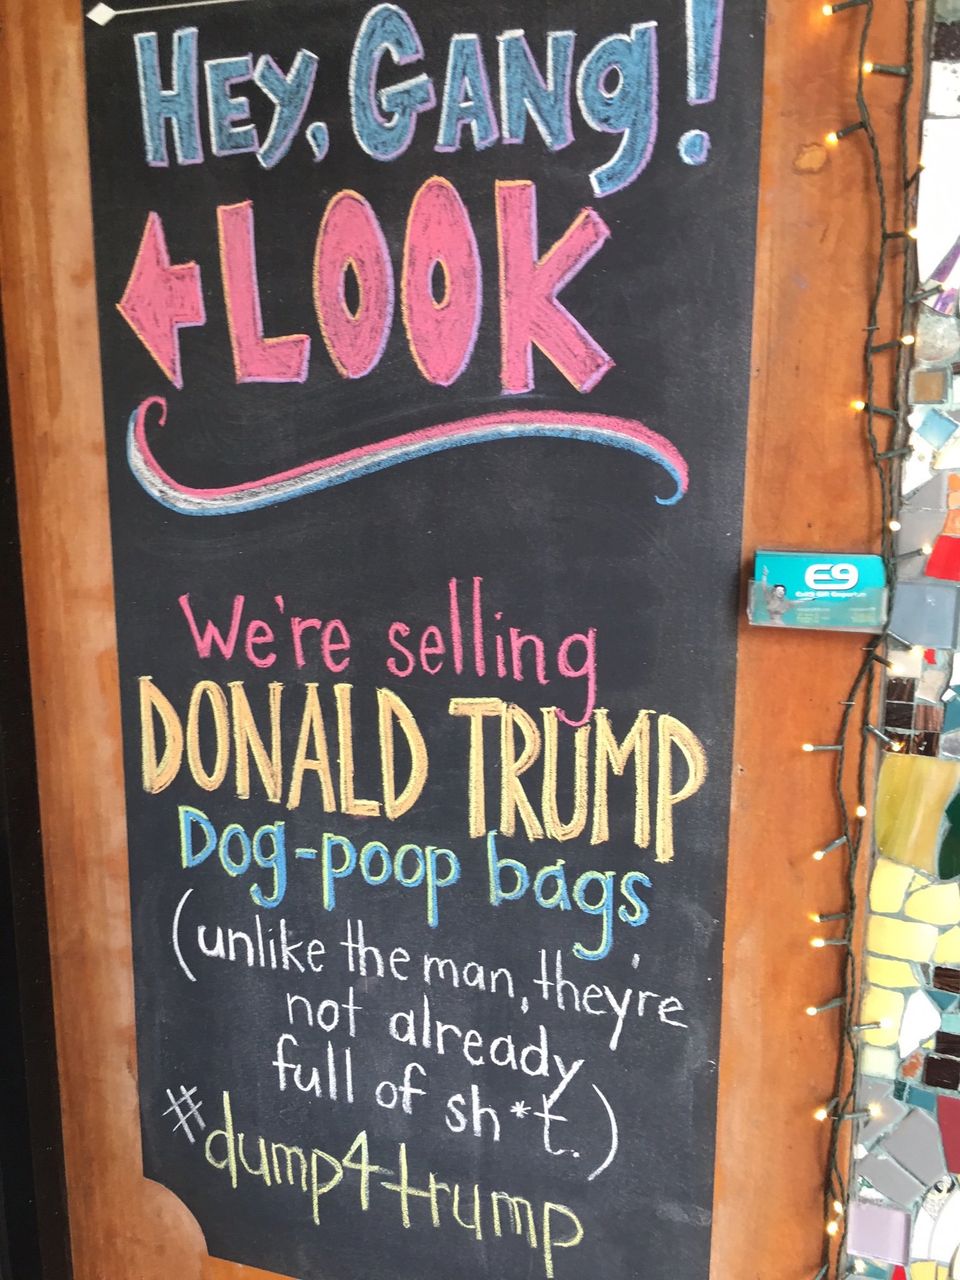 "We're selling Donald Trump dog-poop bags ..."